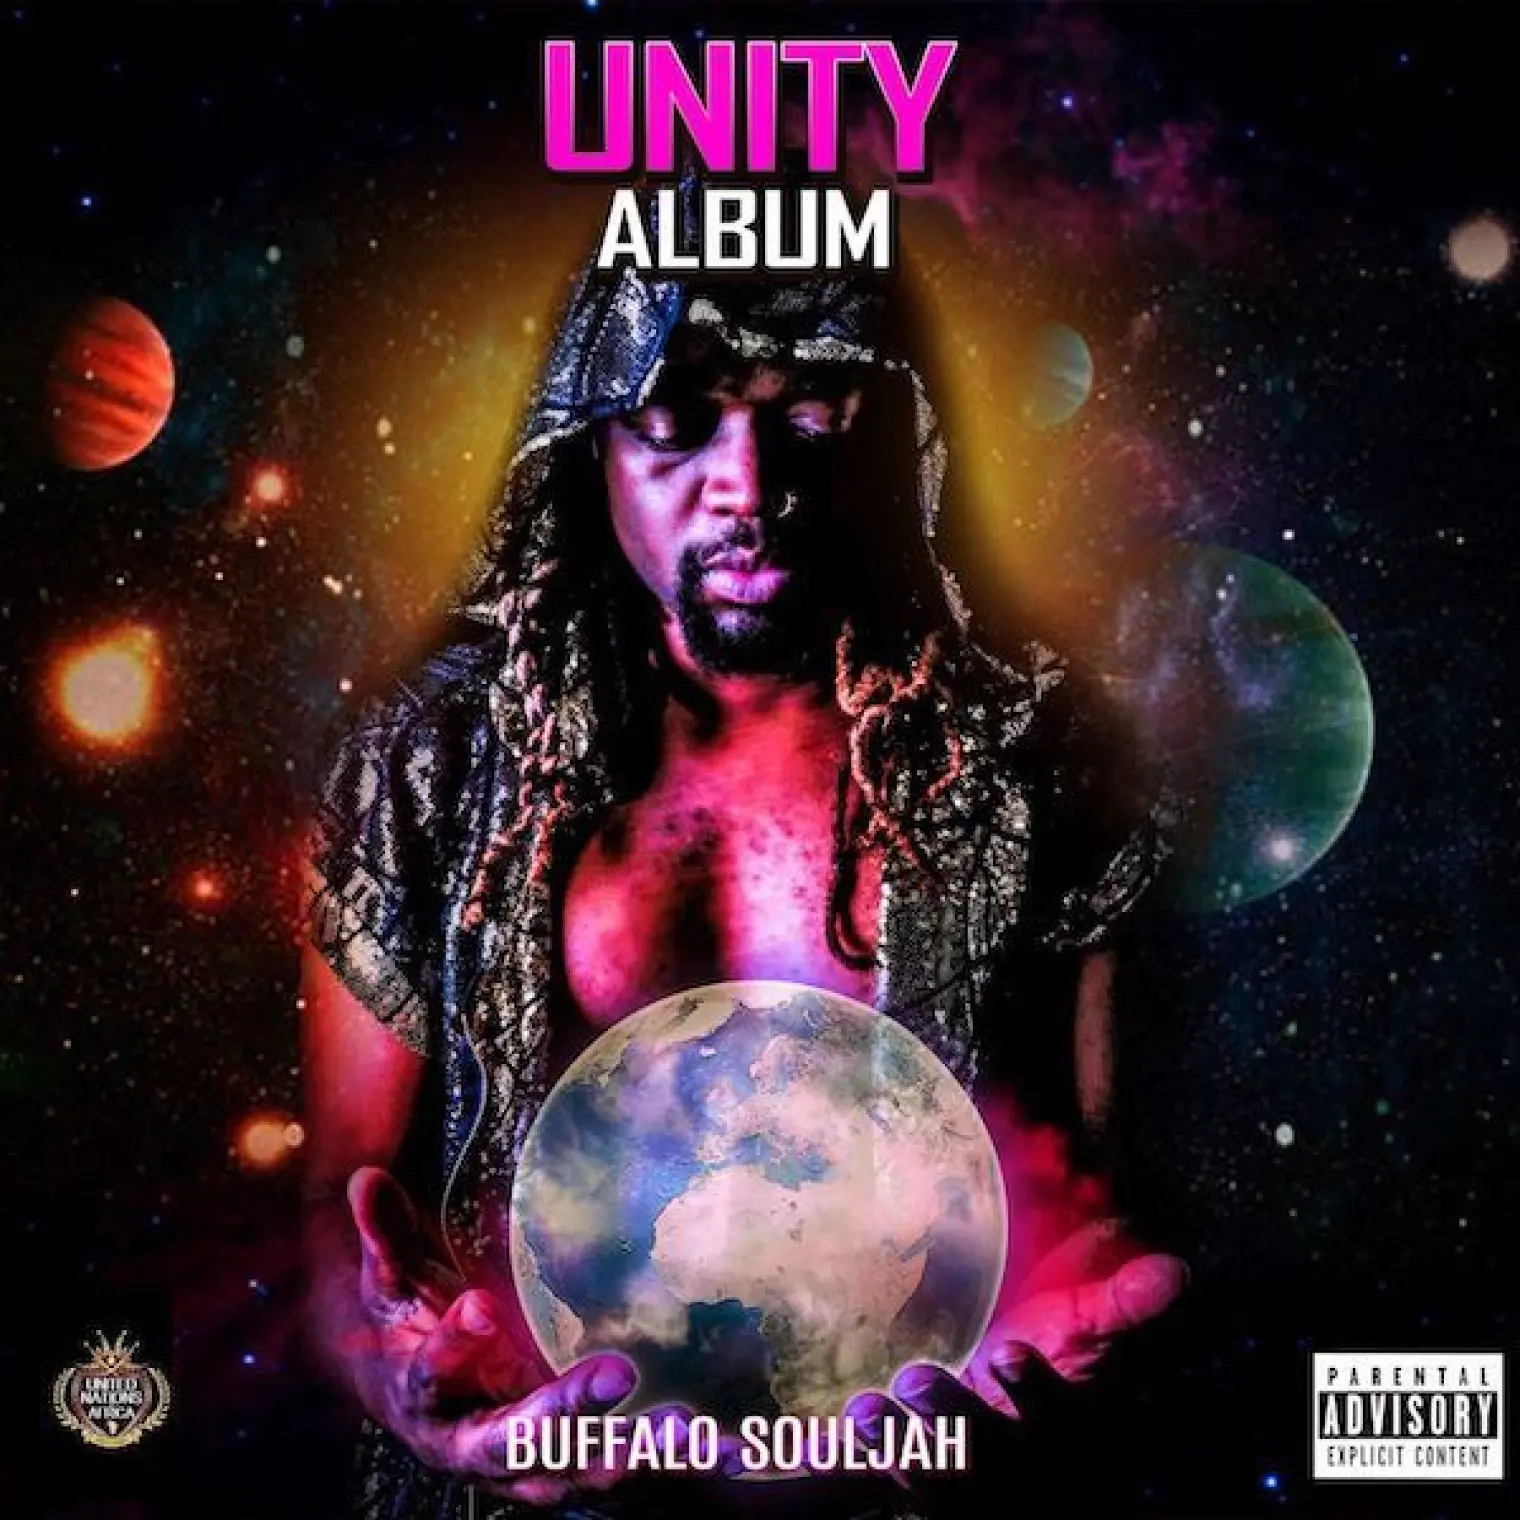 Unity Album -  Buffalo Souljah  